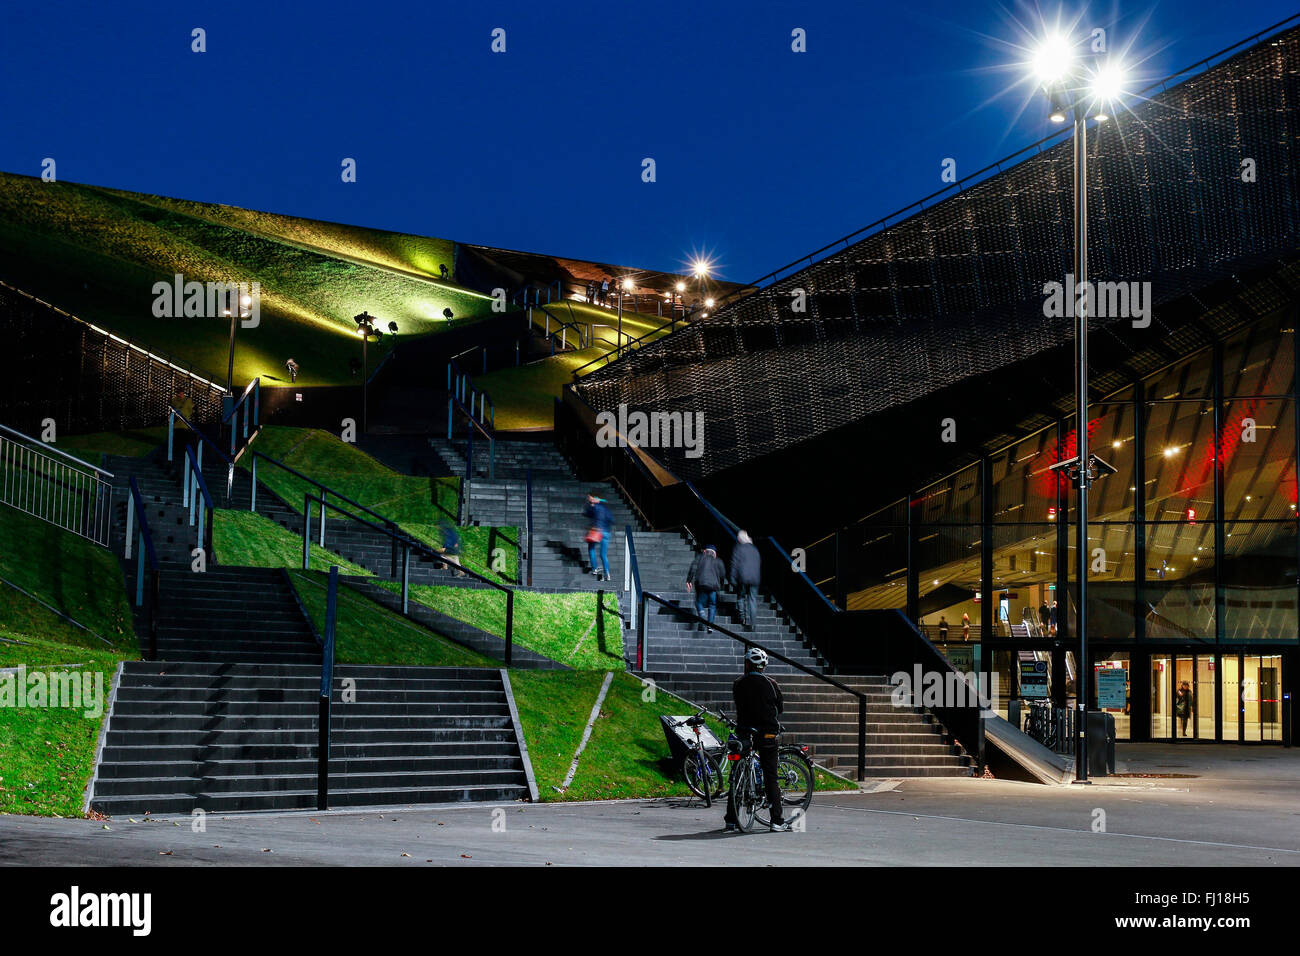 Spodek arena multiuso - un complejo en Katowice, Polonia. Destino de turistas Foto de stock